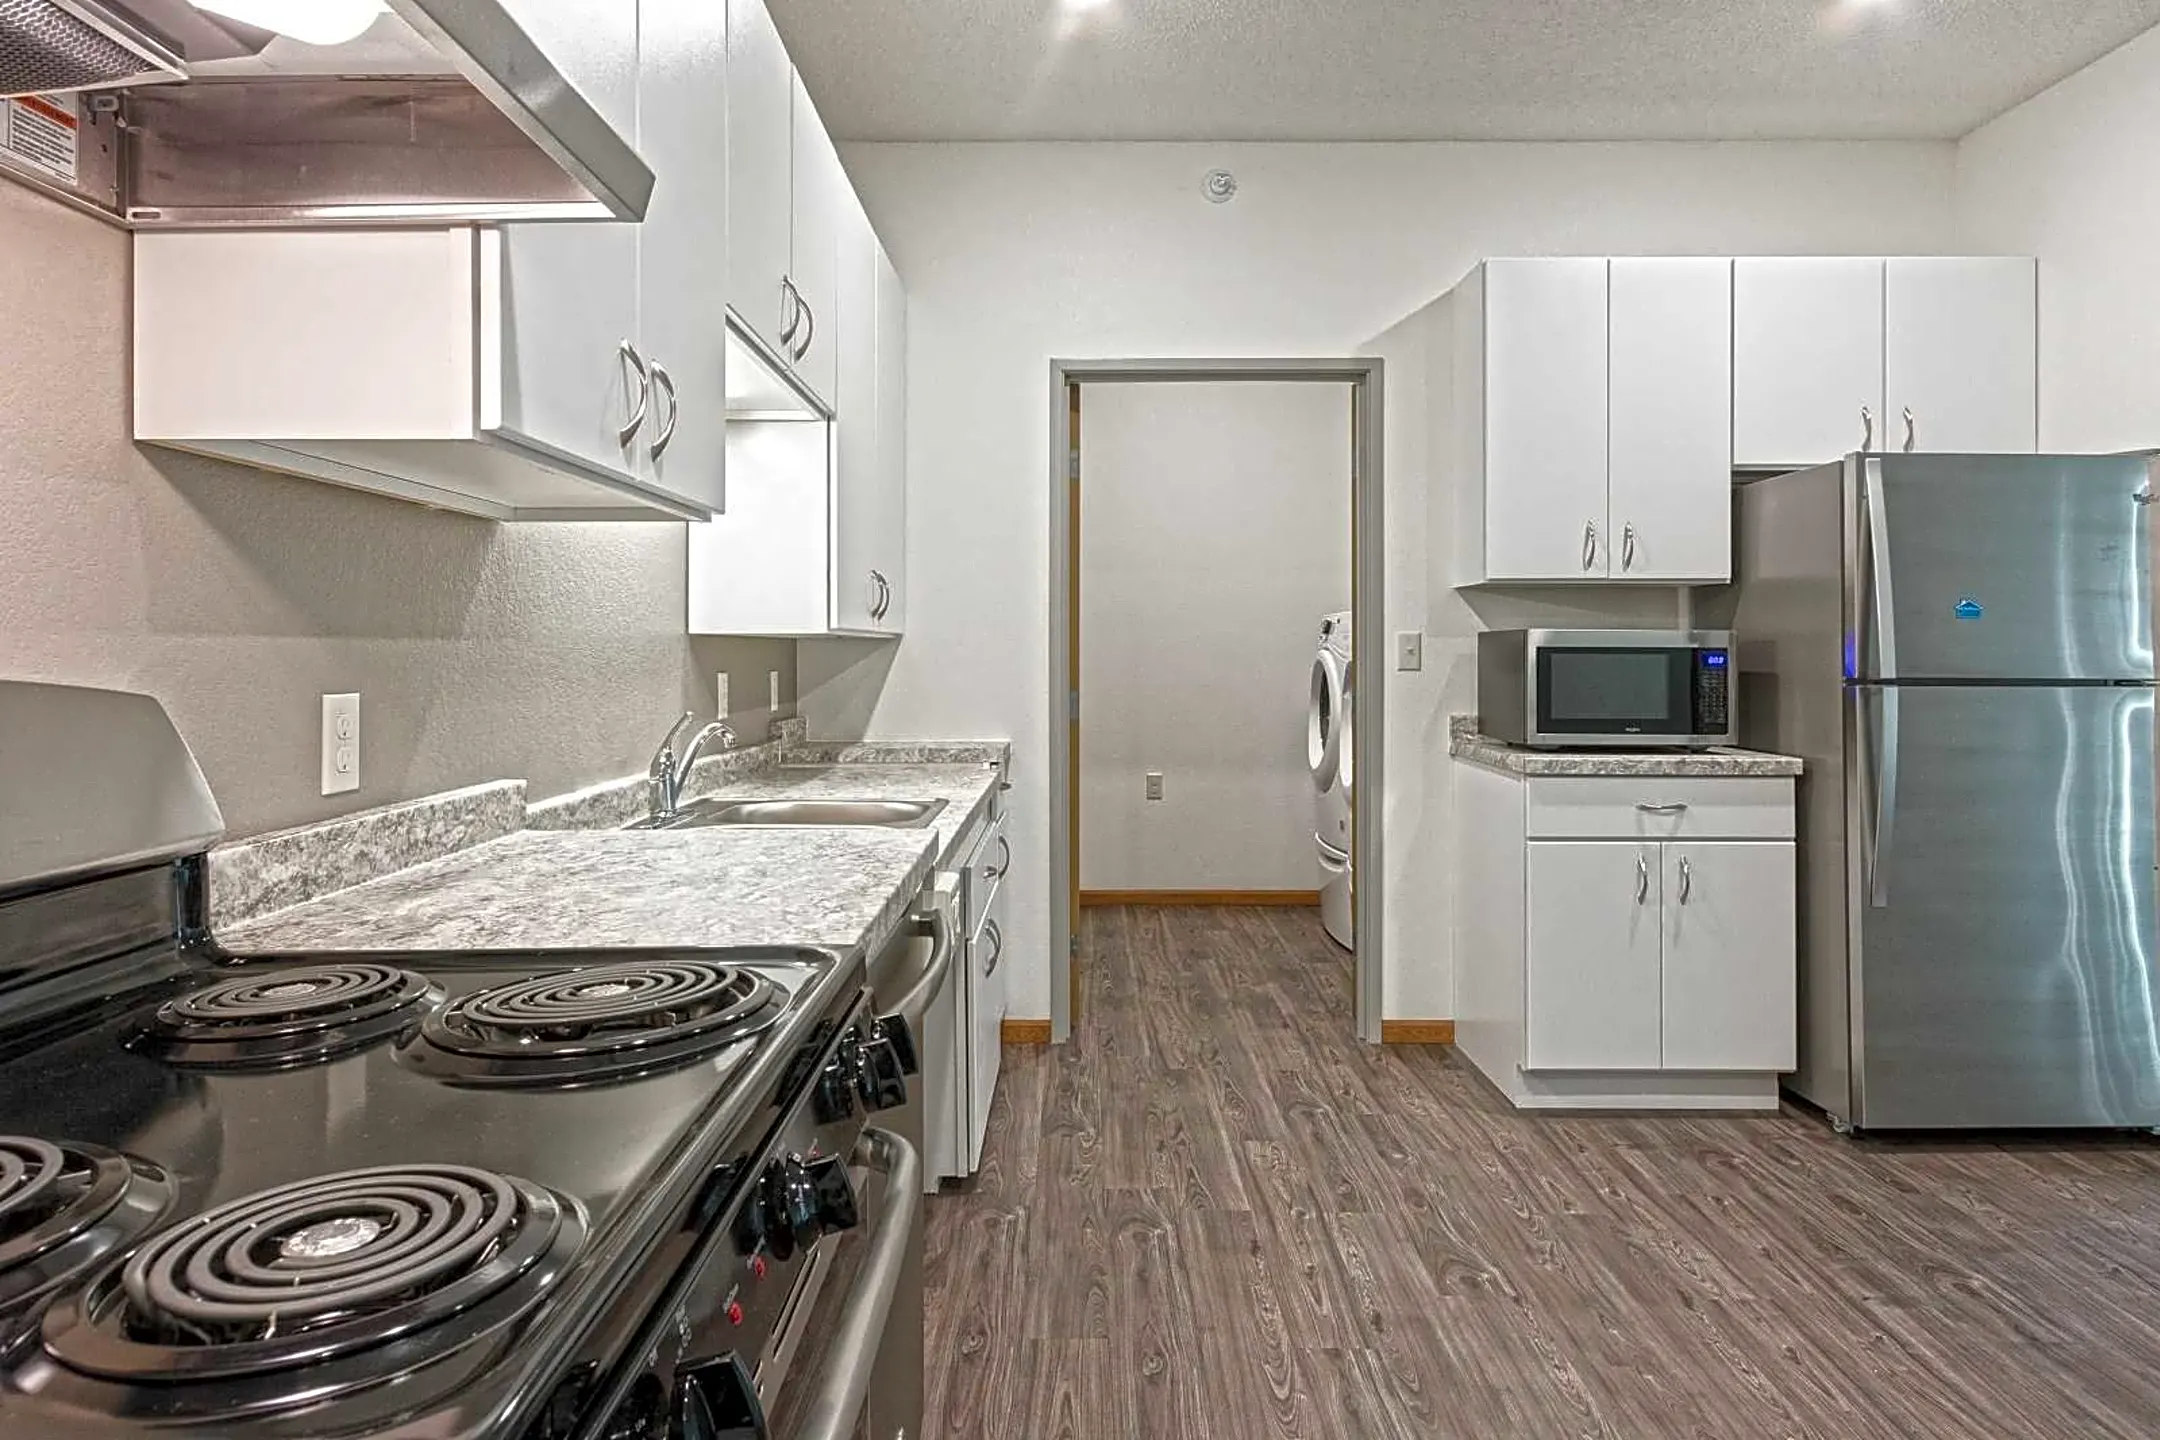 Kitchen - Homefield Senior Living Apartments - Fargo, ND